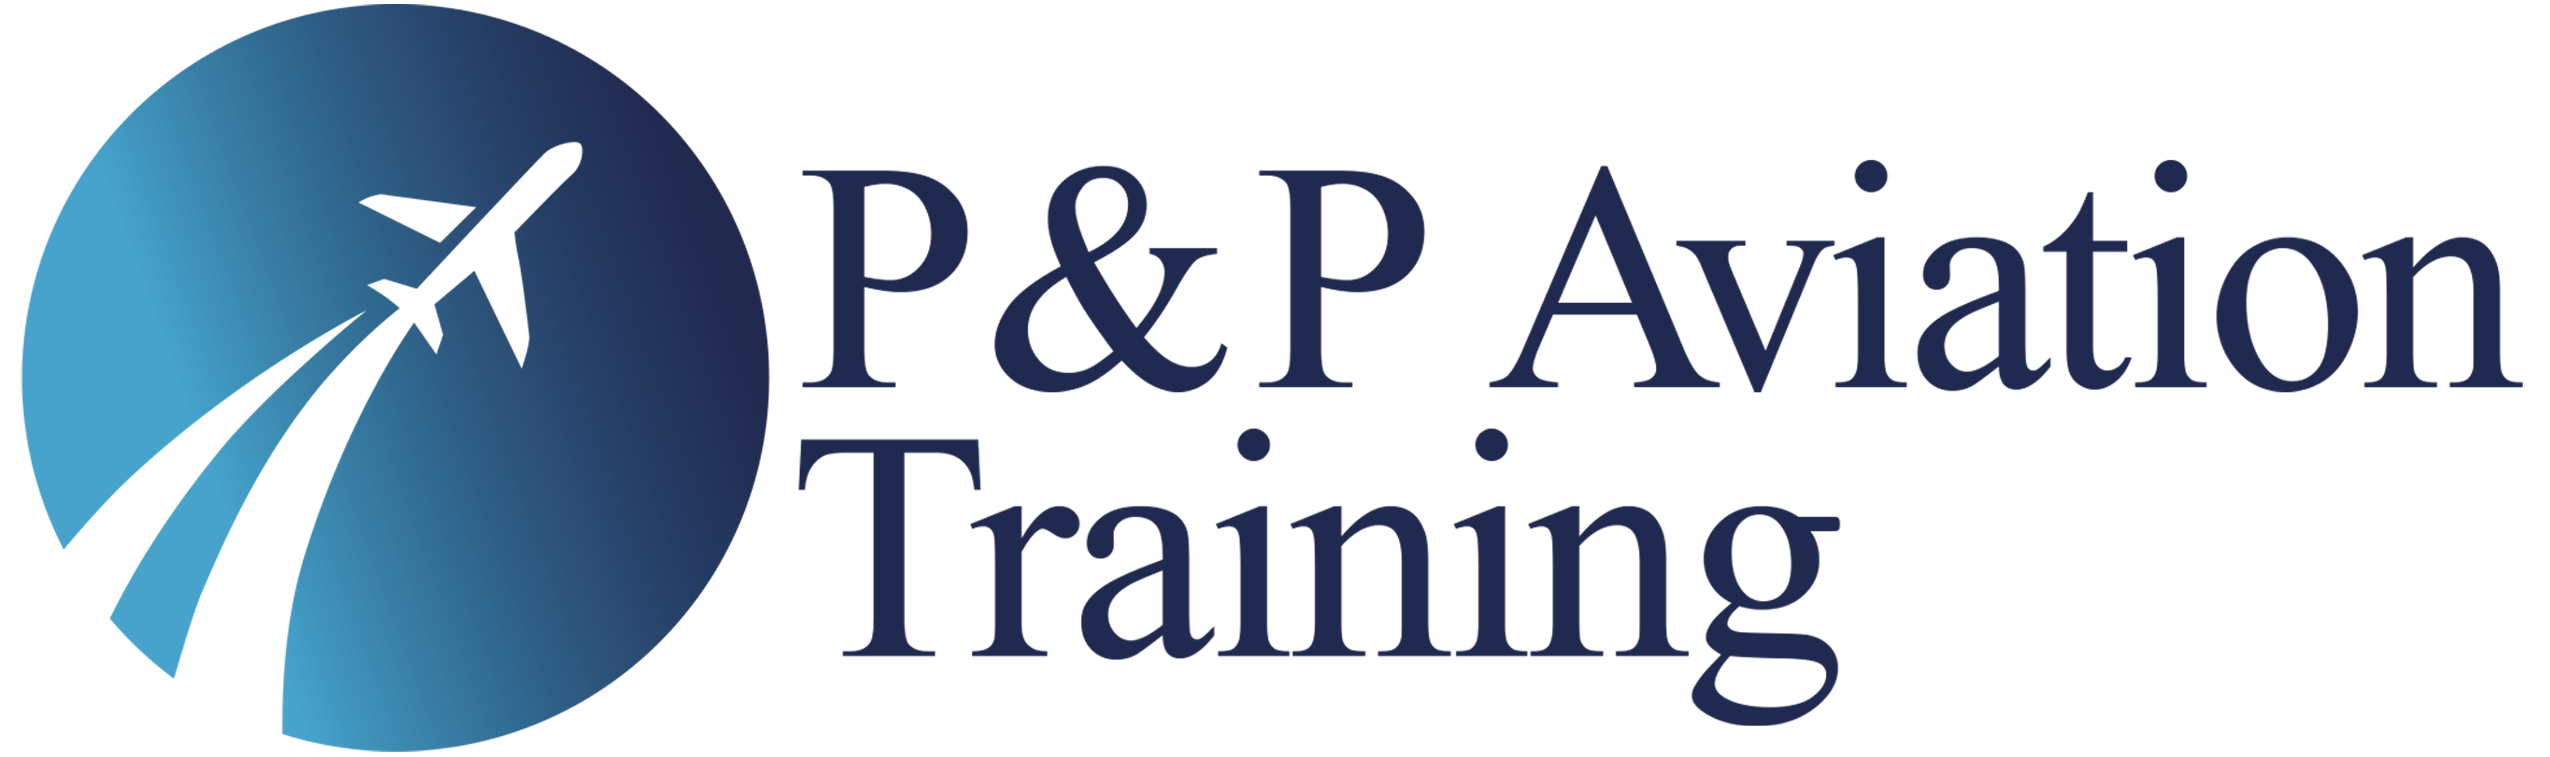 P & P Aviation Training logo